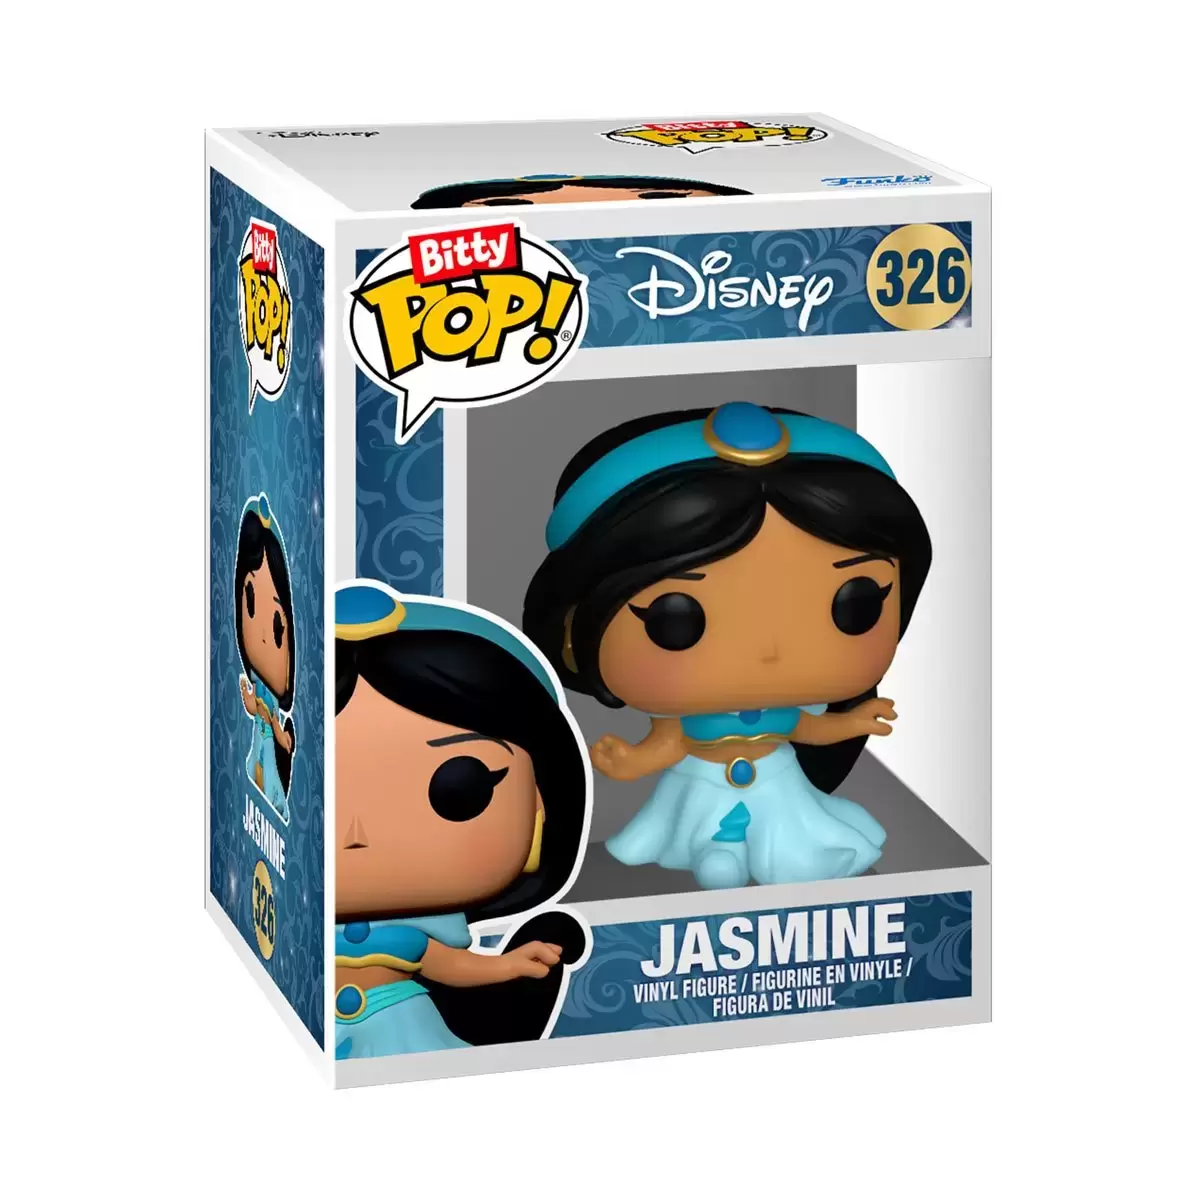 Bitty POP! - Disney Princess - Jasmine